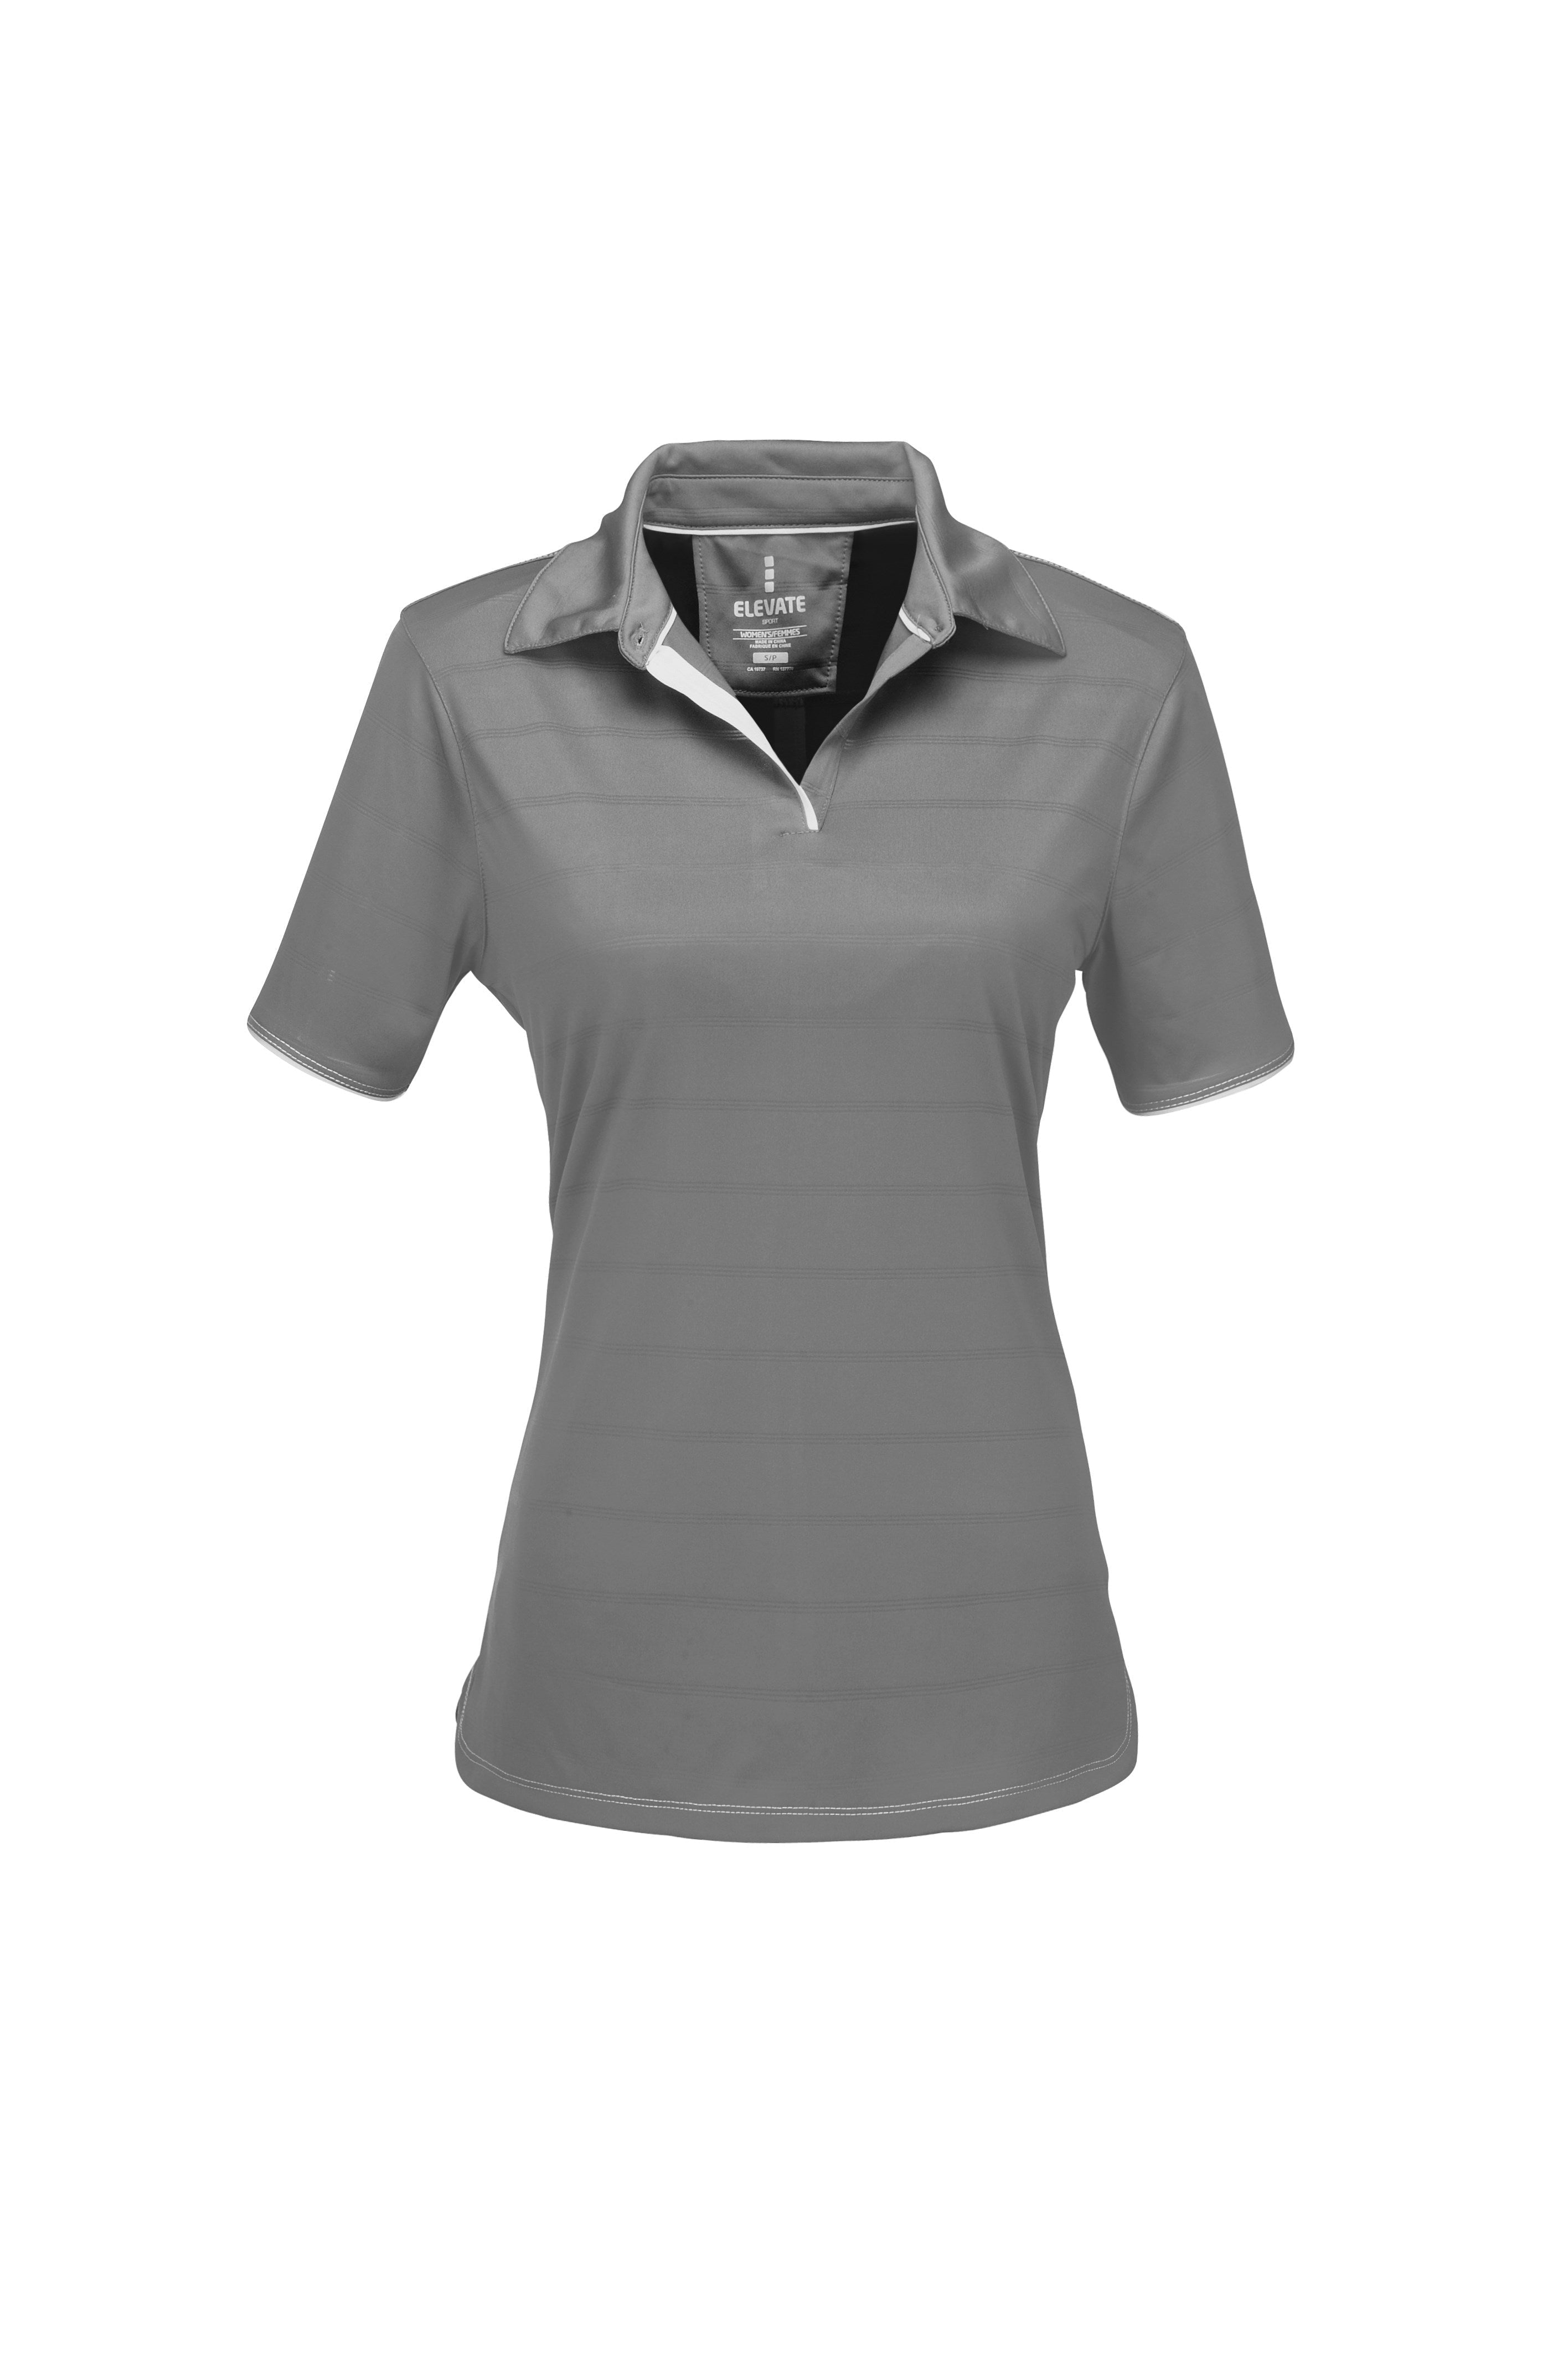 Ladies Prescott Golf Shirt - Black Only-2XL-Grey-GY